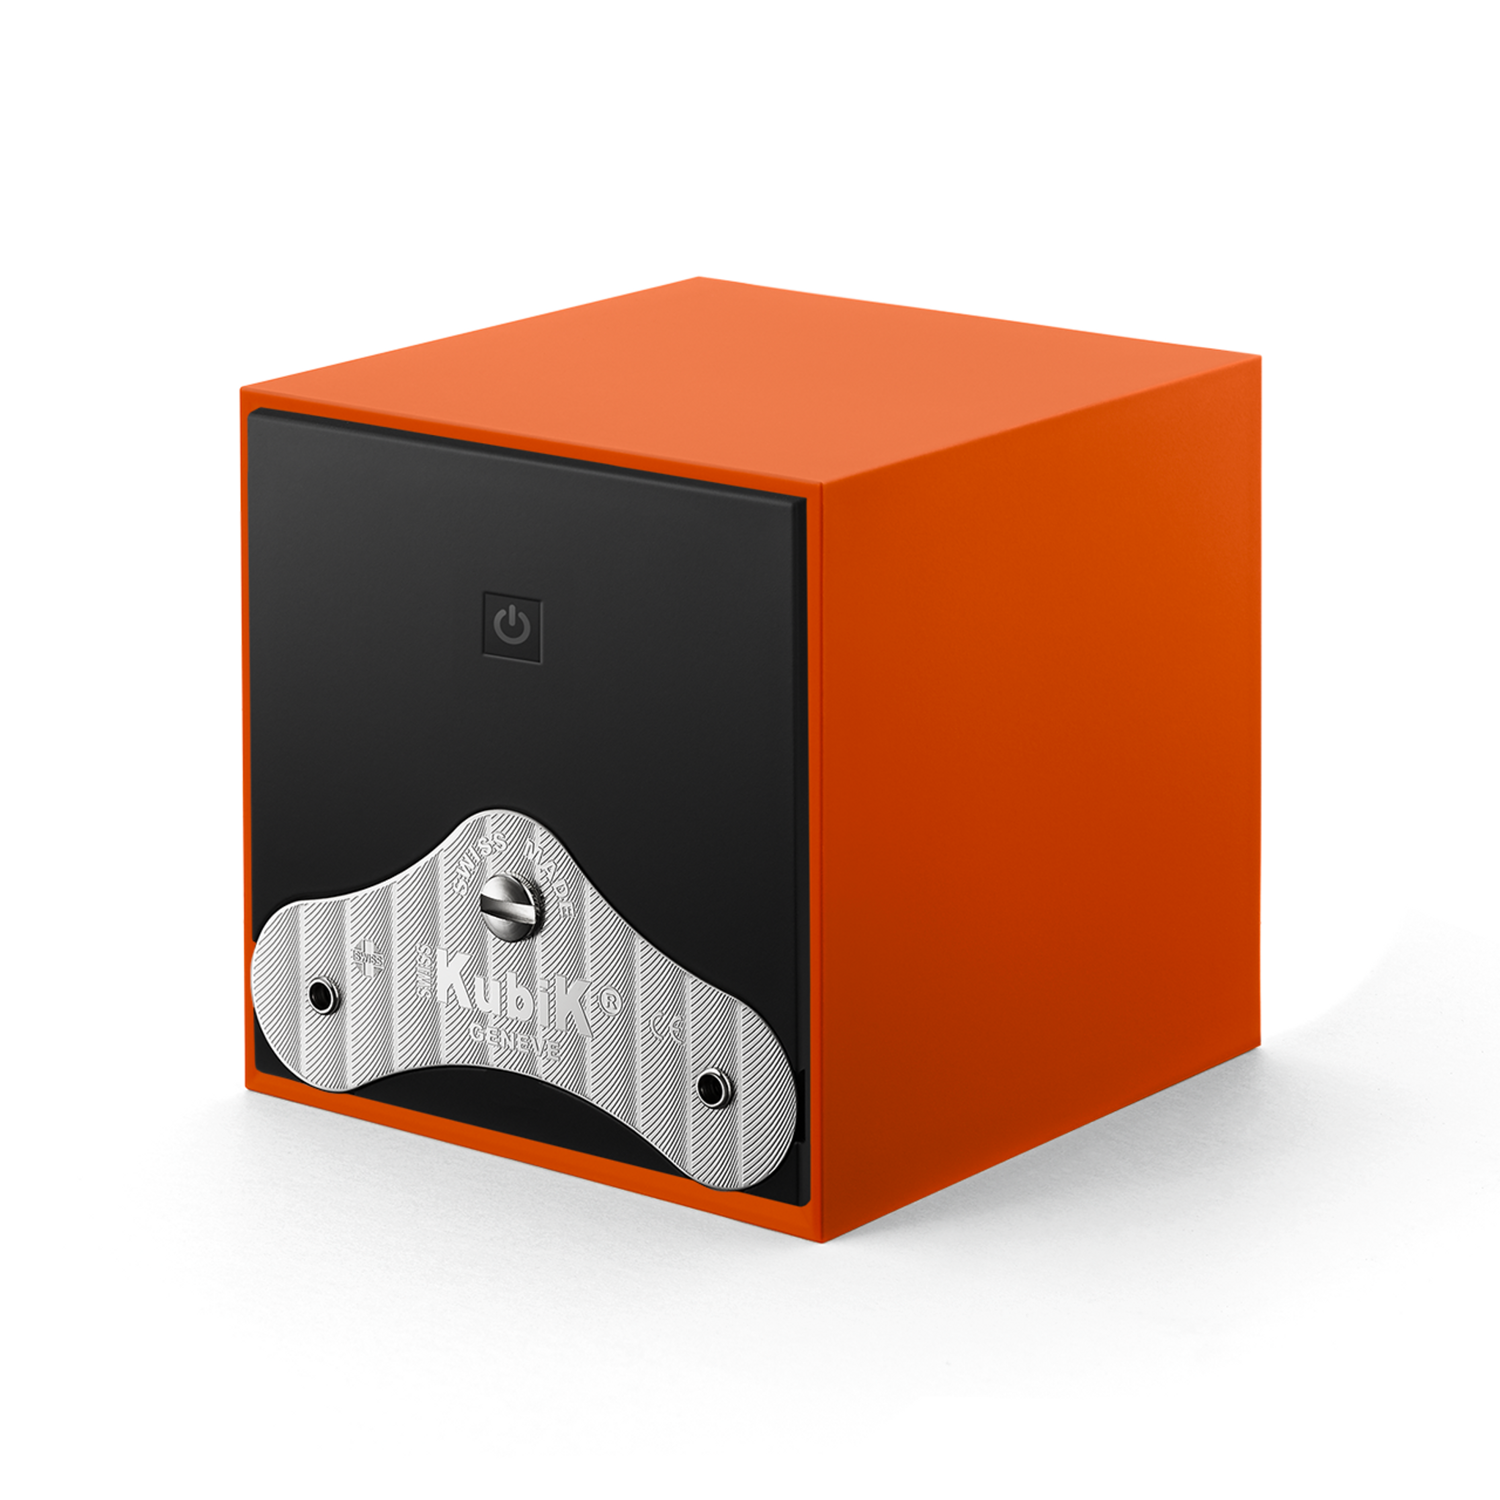 Swiss Kubik Startbox Orange